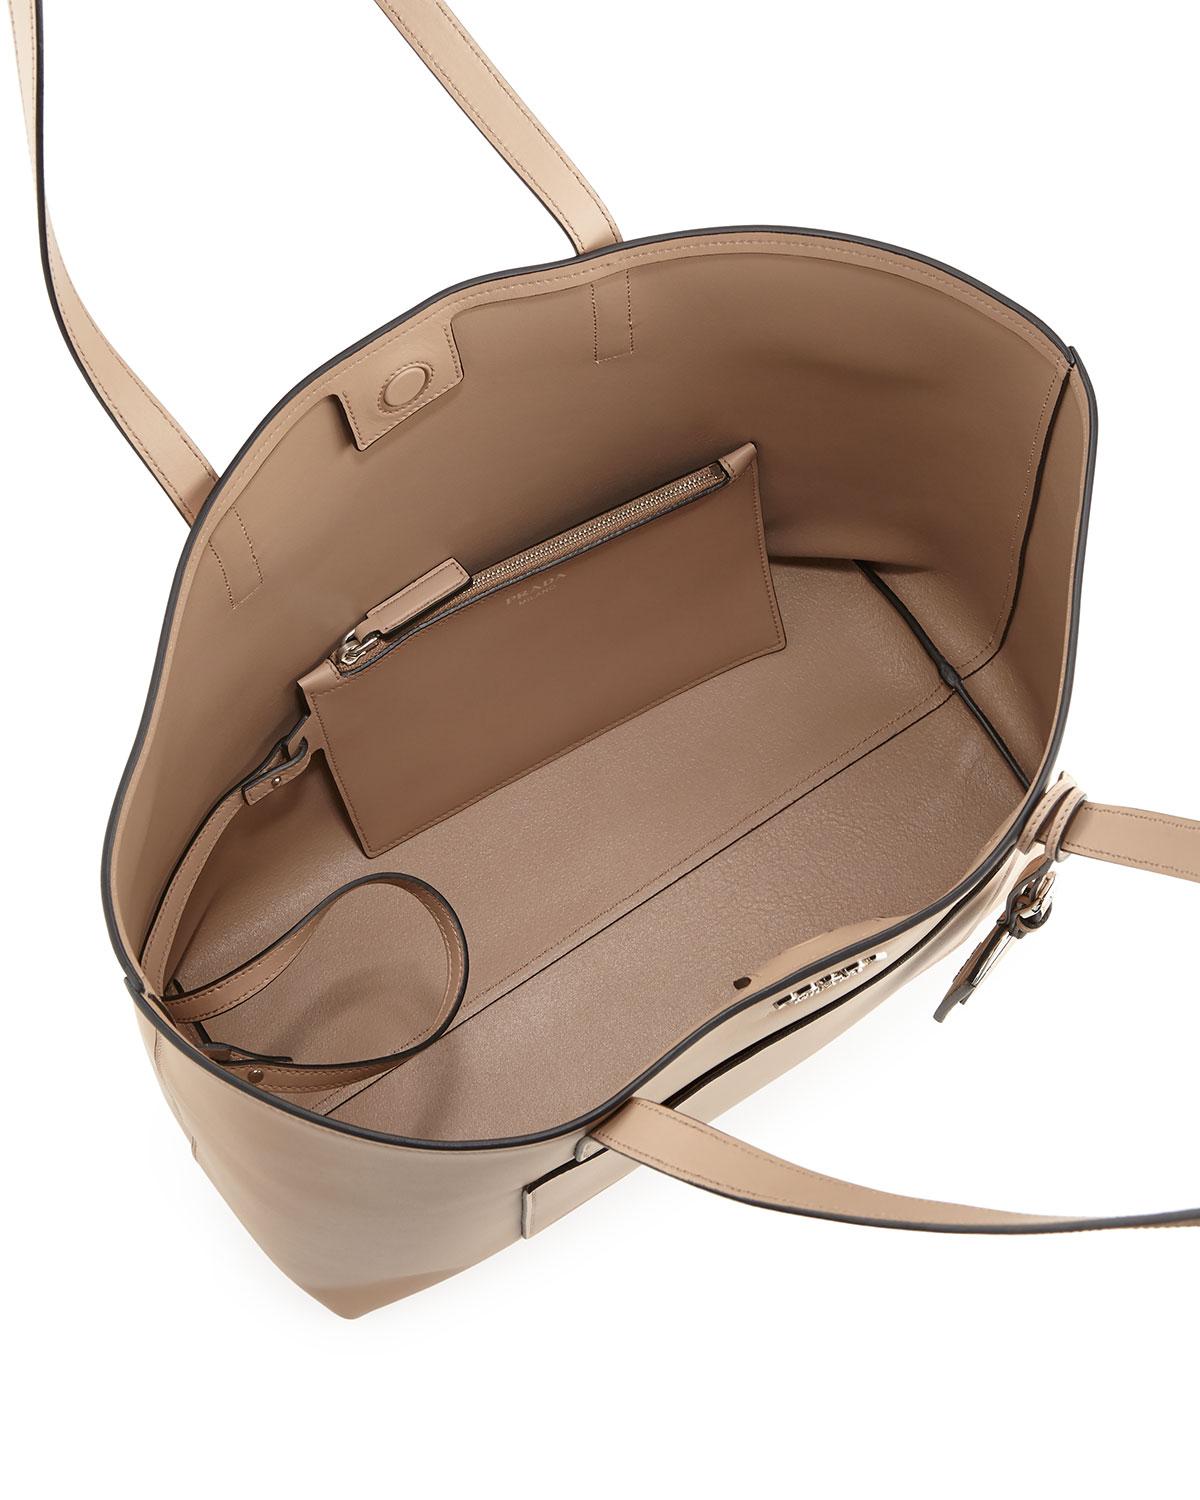 Lyst - Prada Soft Leather Shopper Tote Bag